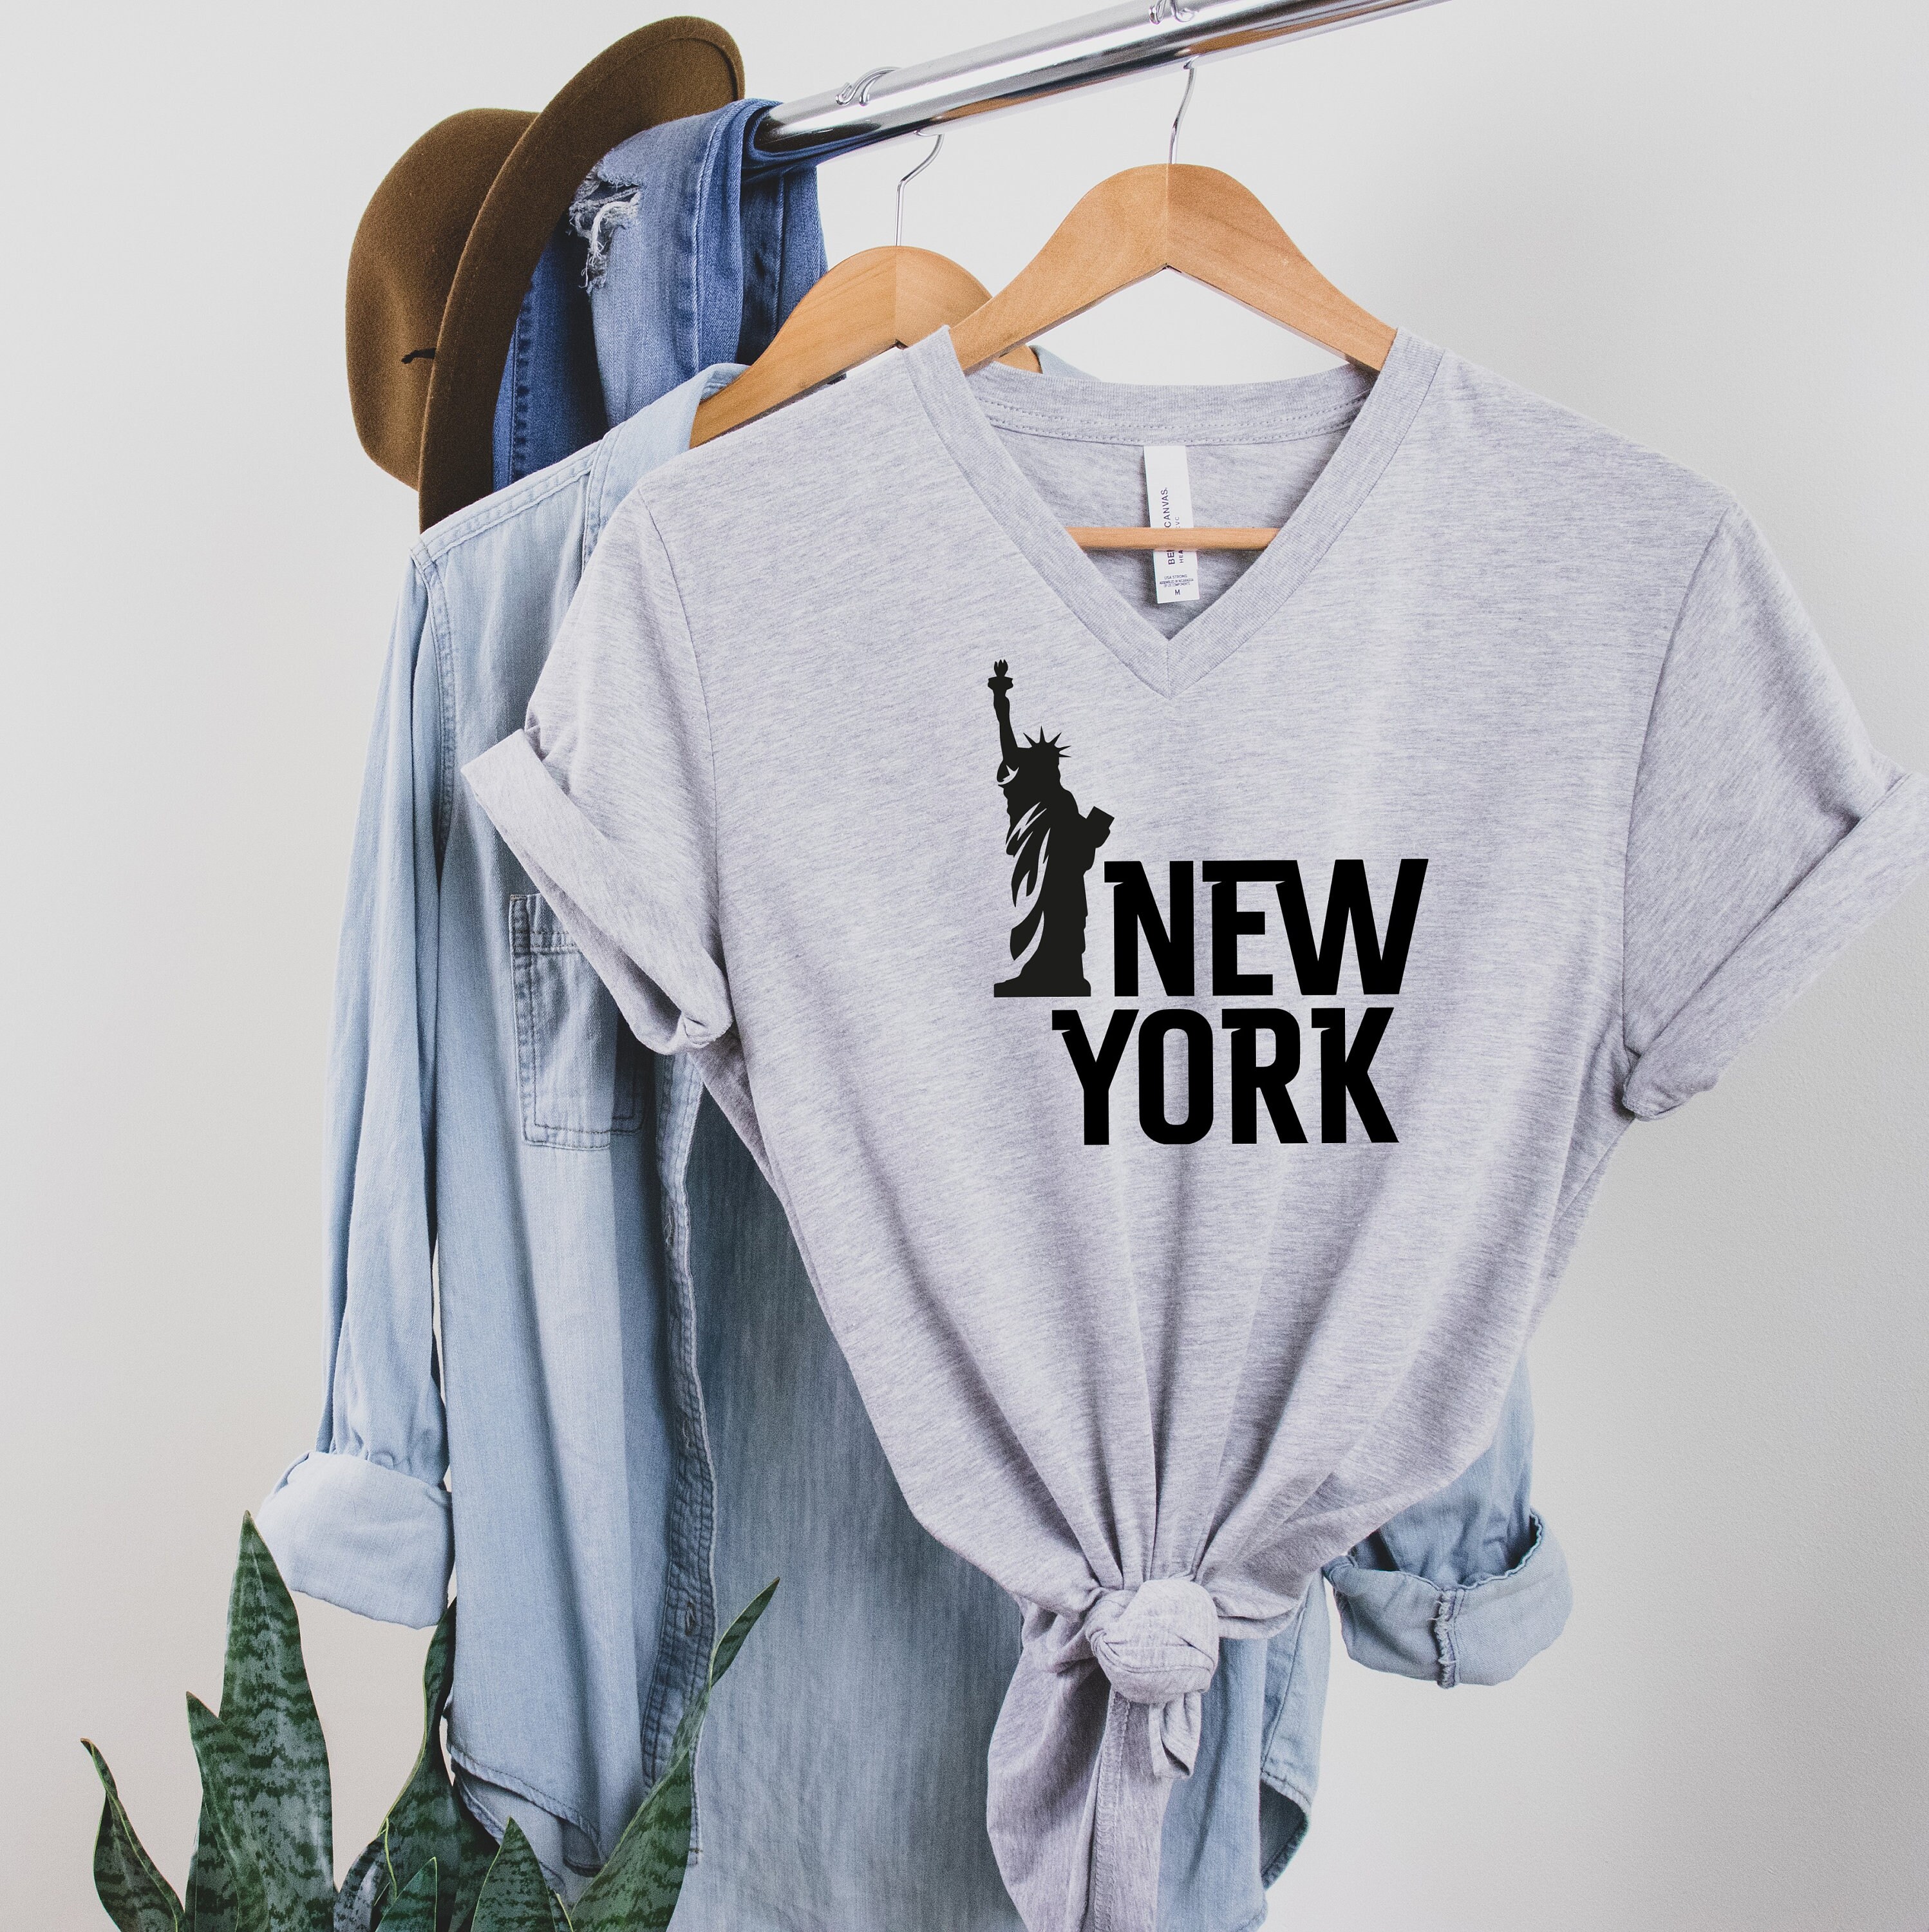 New York Shirt Statue of Liberty National Monument Shirt New | Etsy